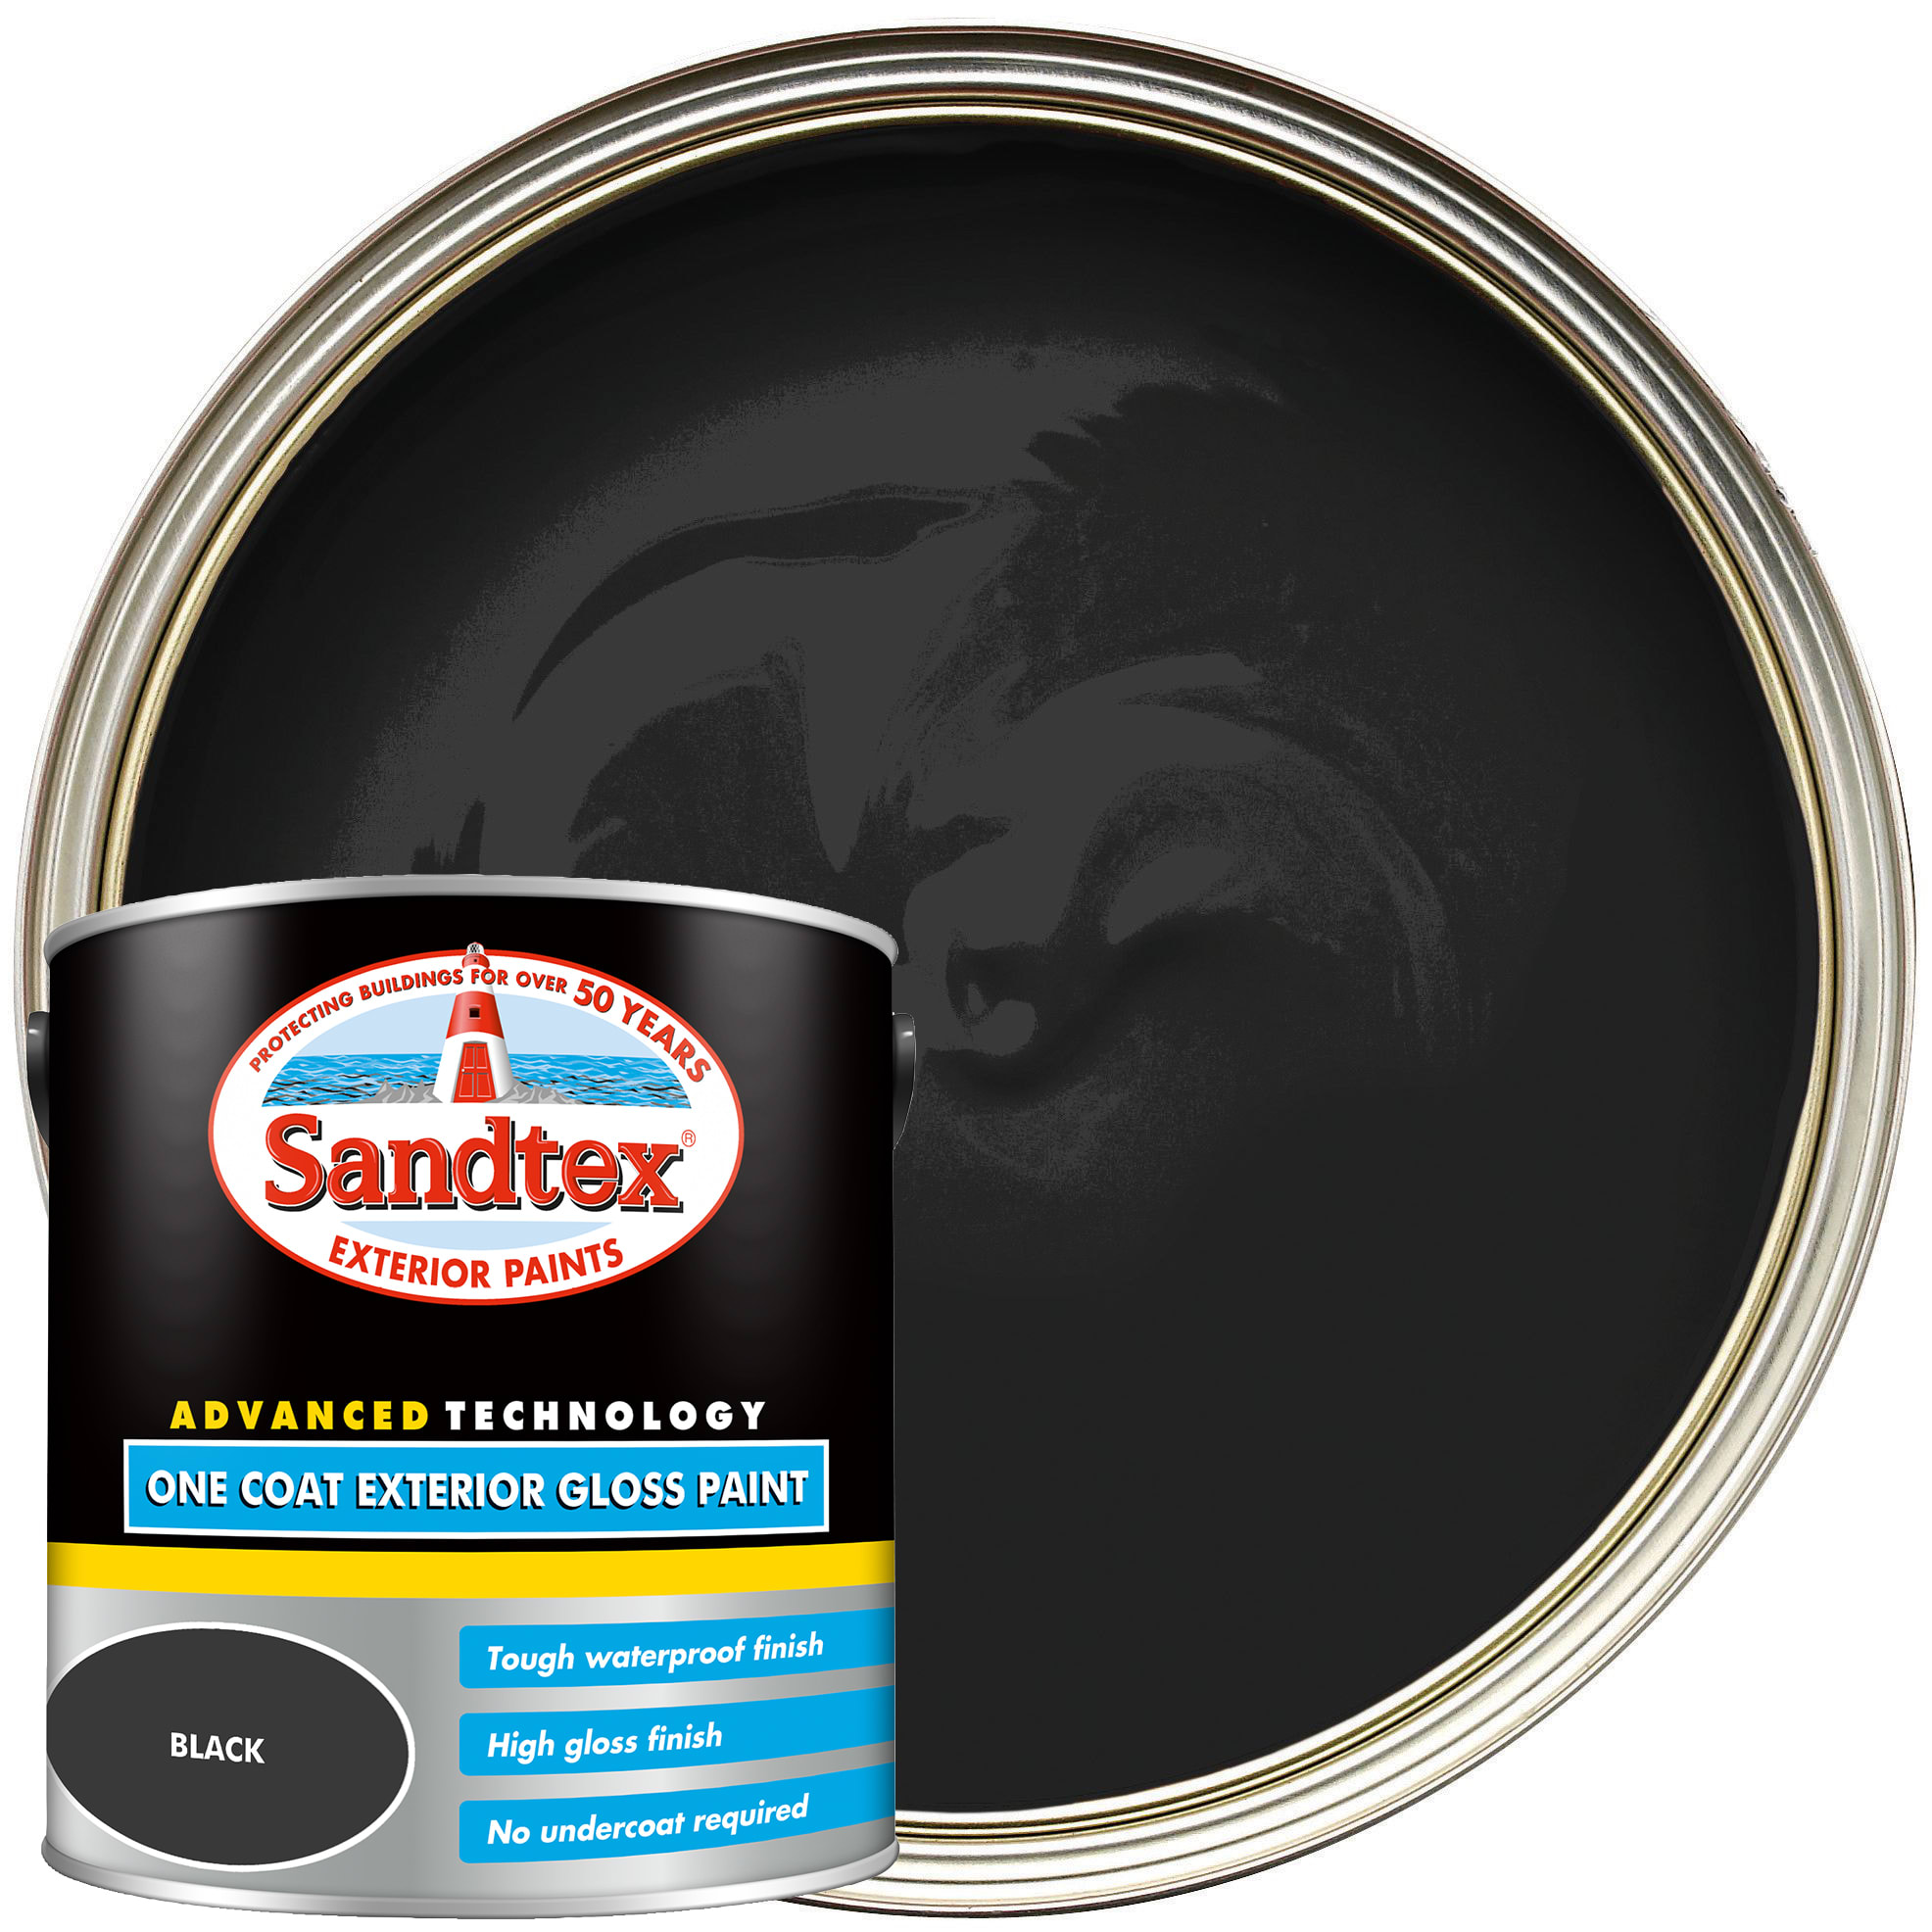 Sandtex One Coat Exterior Gloss Paint - Black